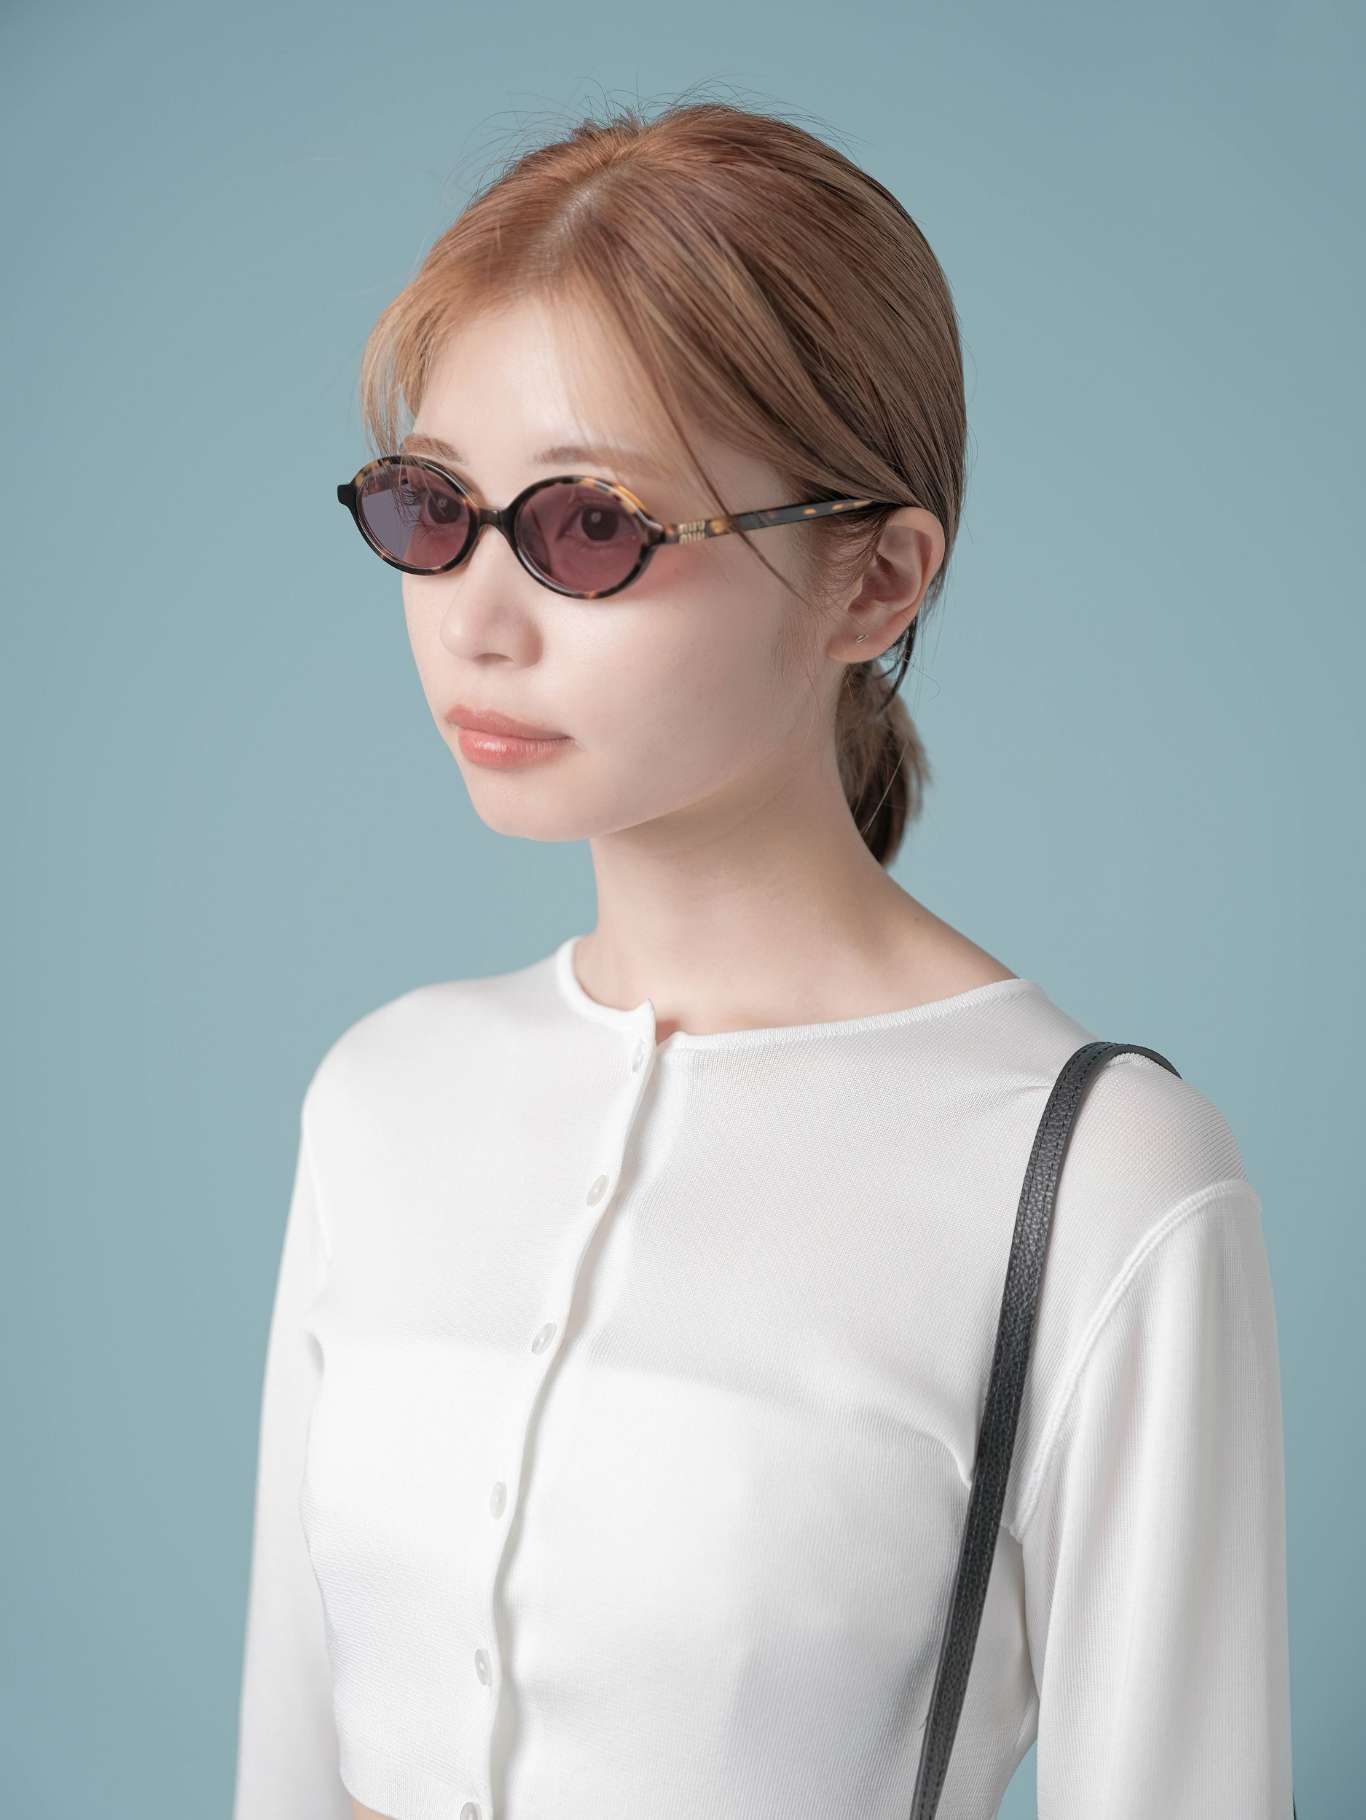 MIUMIU EYEWEAR - EYETHINK eyewear look 2024 style by EDIT.FOR LULU 